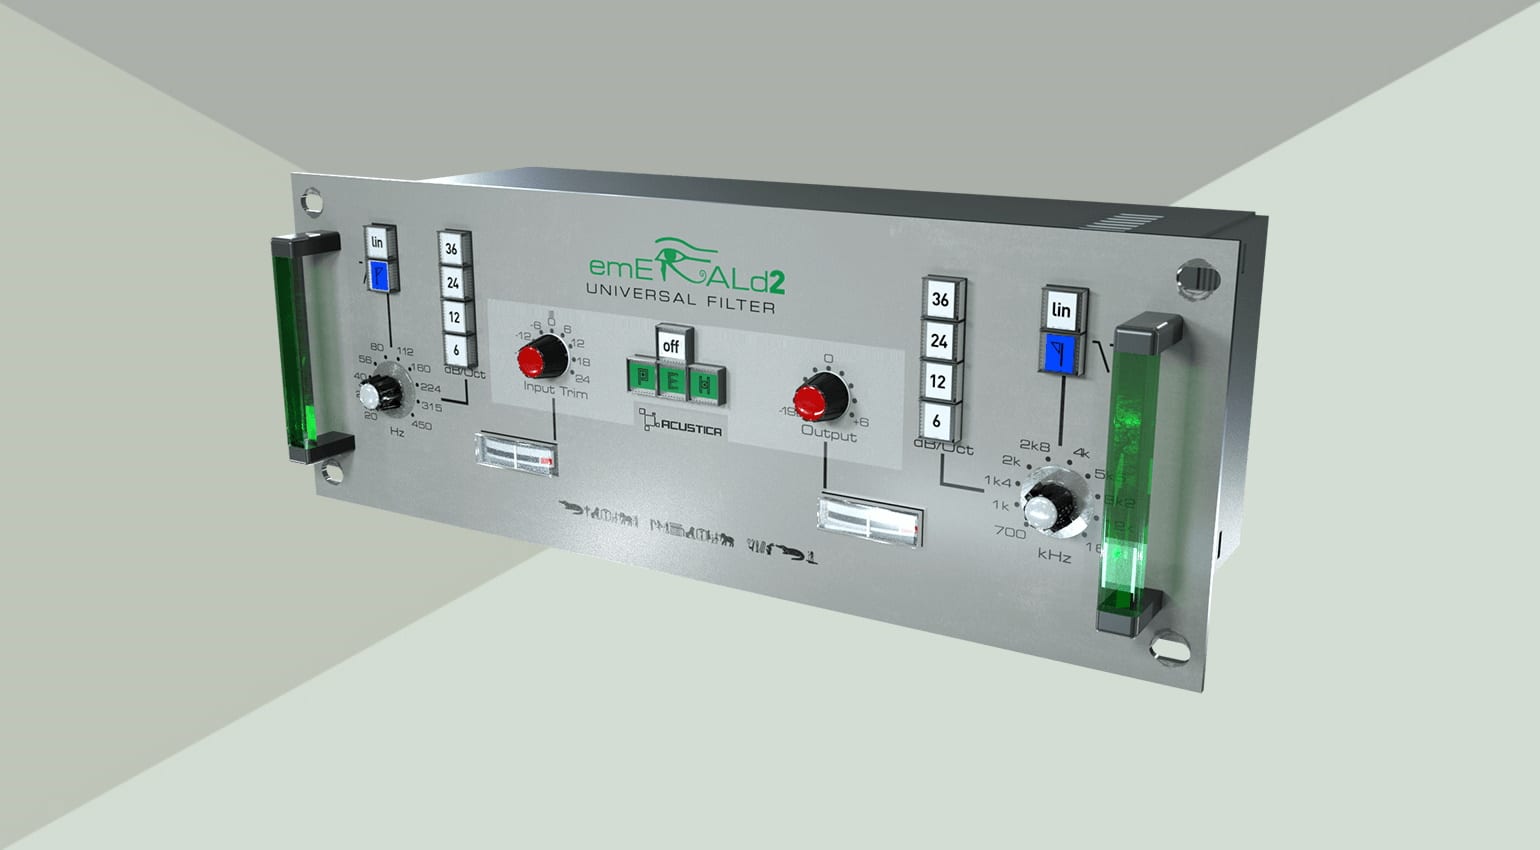 acustica audio emerald 2 filter